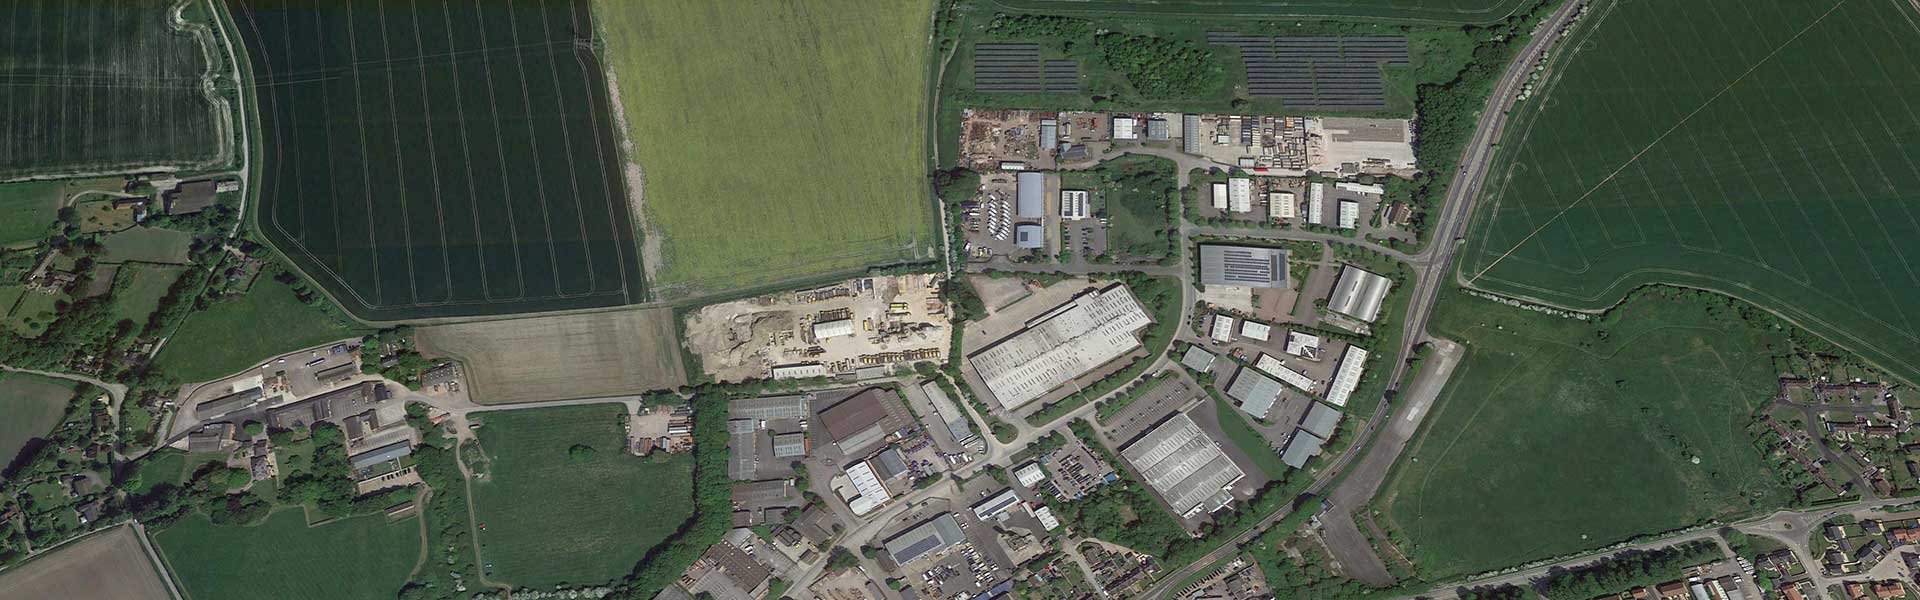 Hopton Industrial Estate, Devizes Boundary 